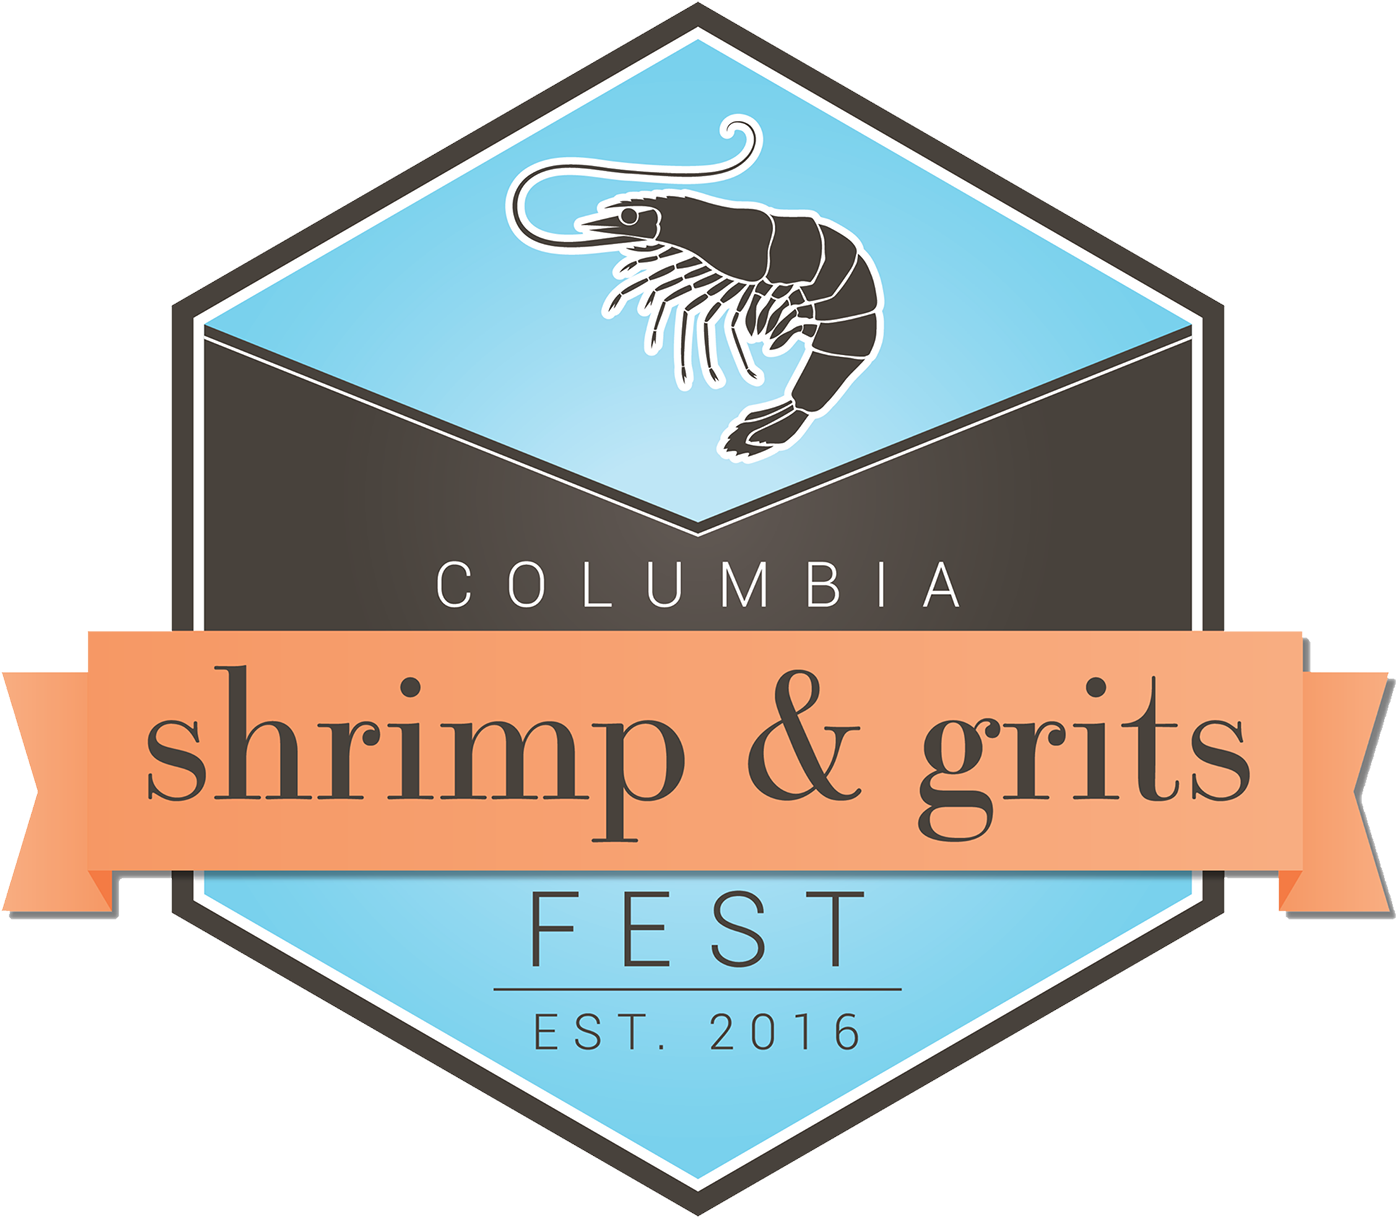 Download Columbia Shrimp & Grits Festival Illustration PNG Image with